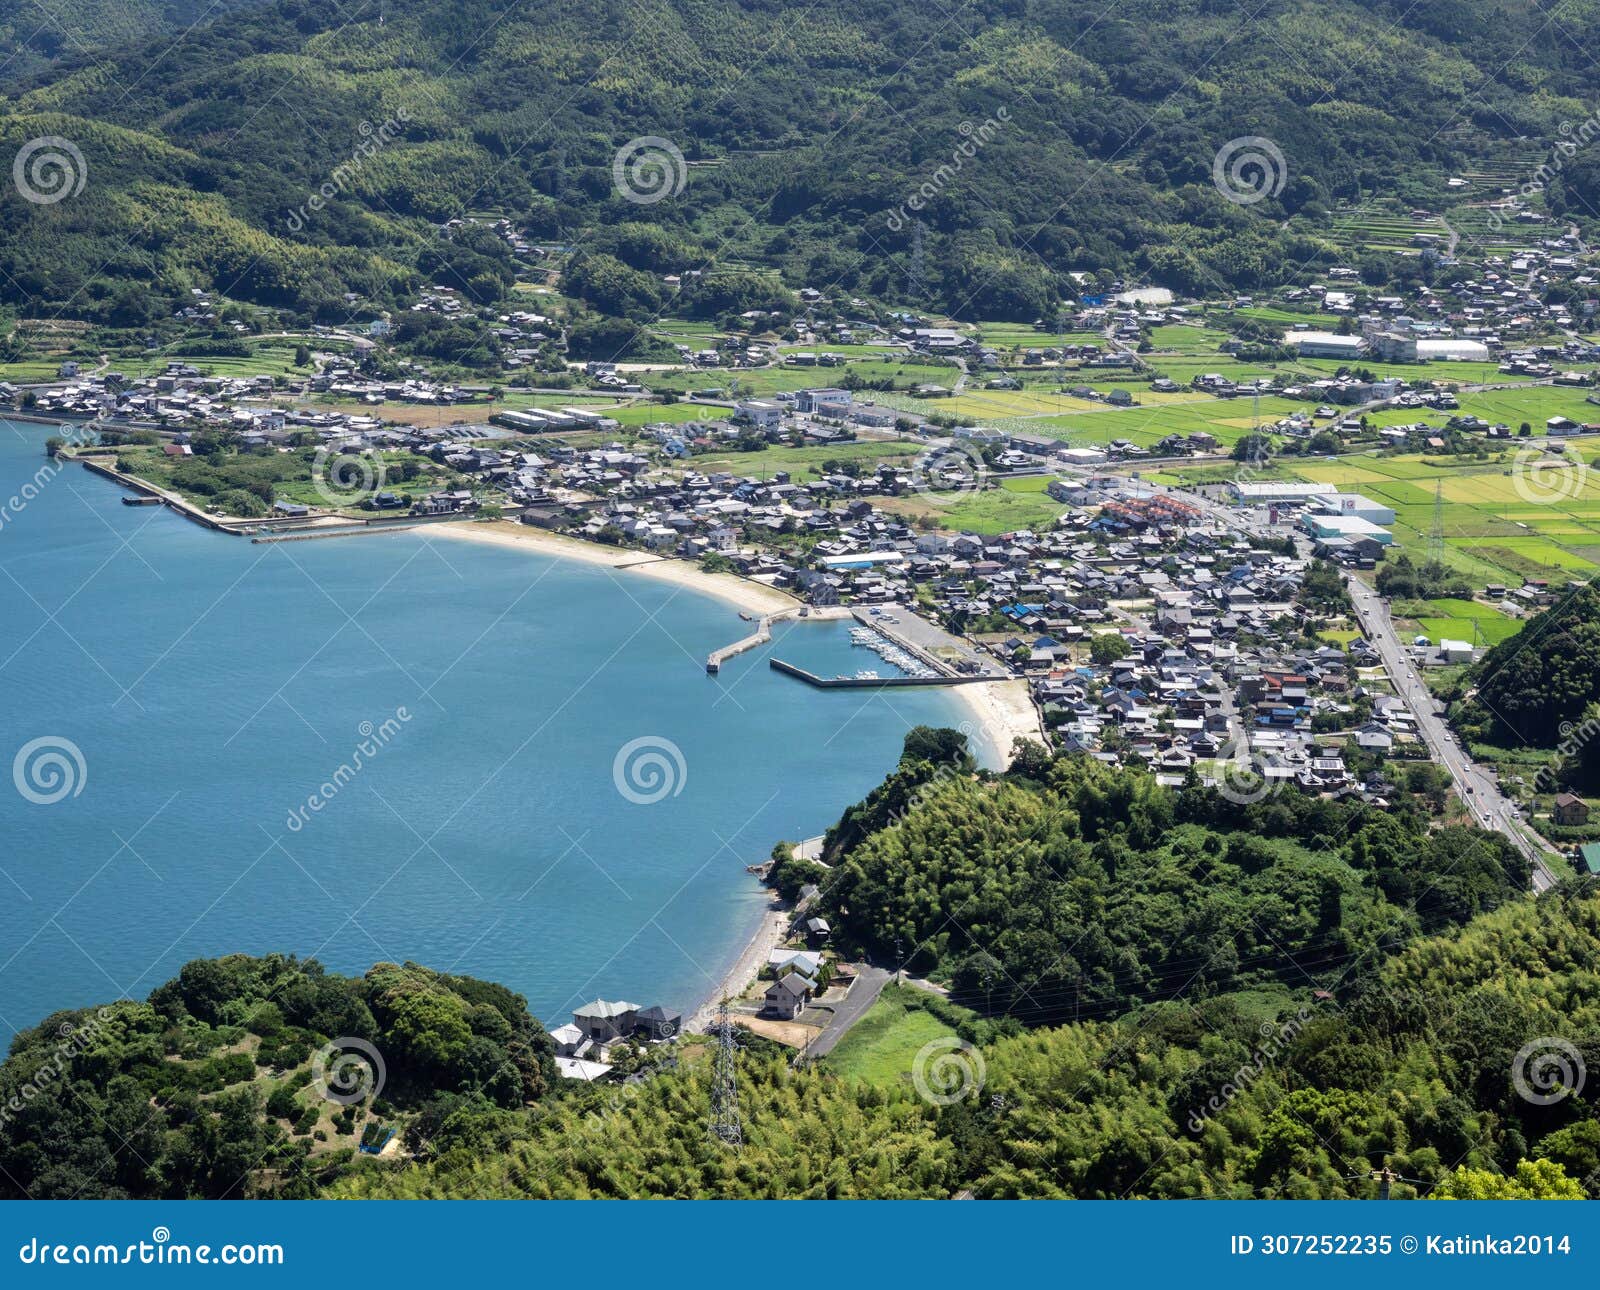 scenic view of suo oshima island from iinoyama viewpoint